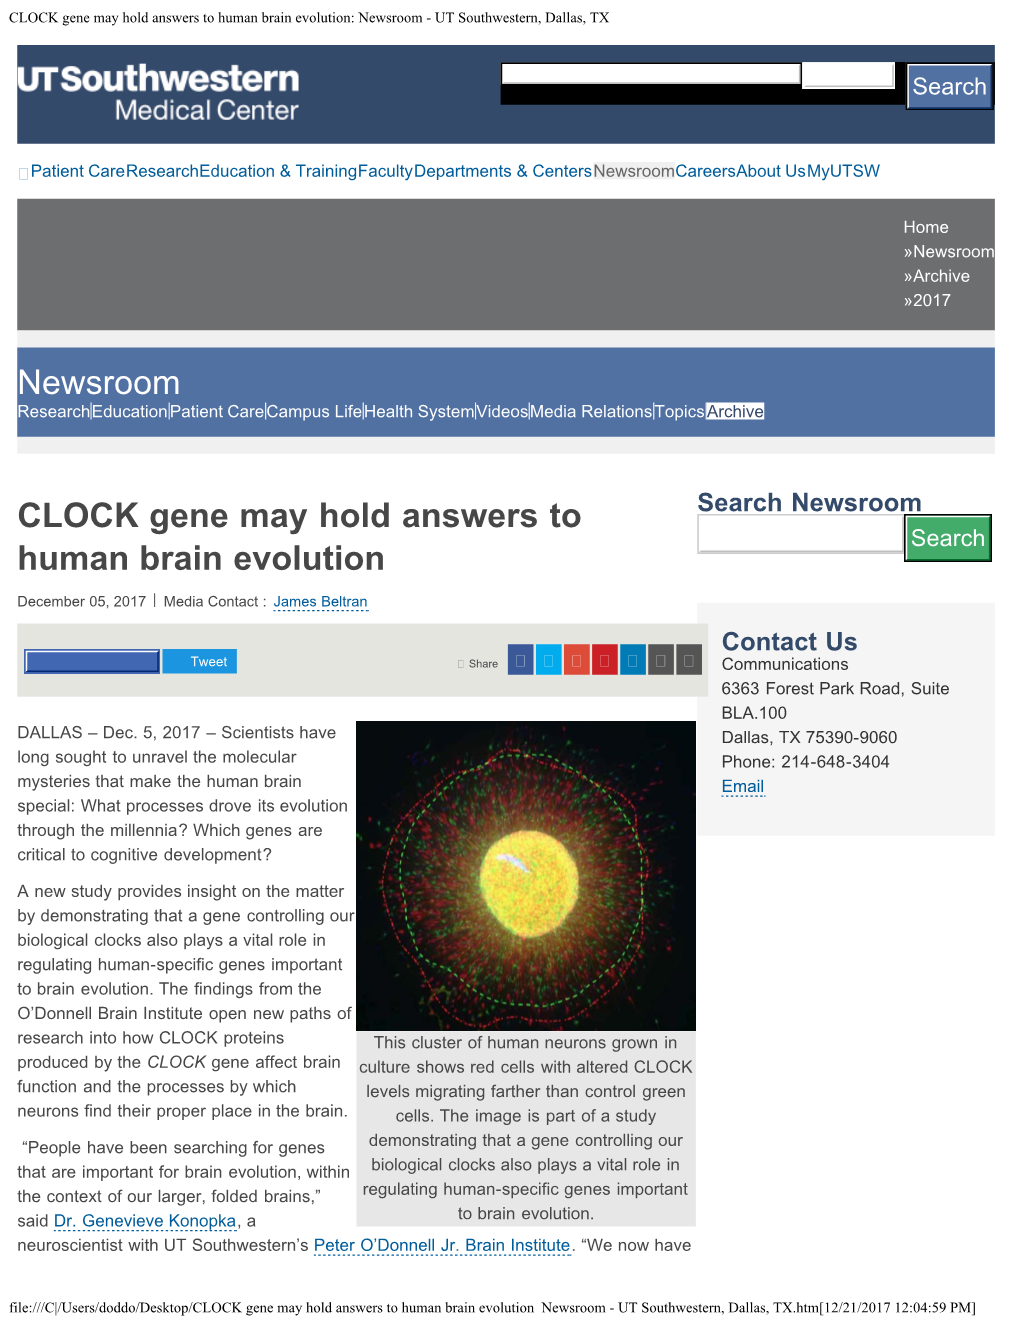 CLOCK Gene May Hold Answers to Human Brain Evolution: Newsroom - UT Southwestern, Dallas, TX